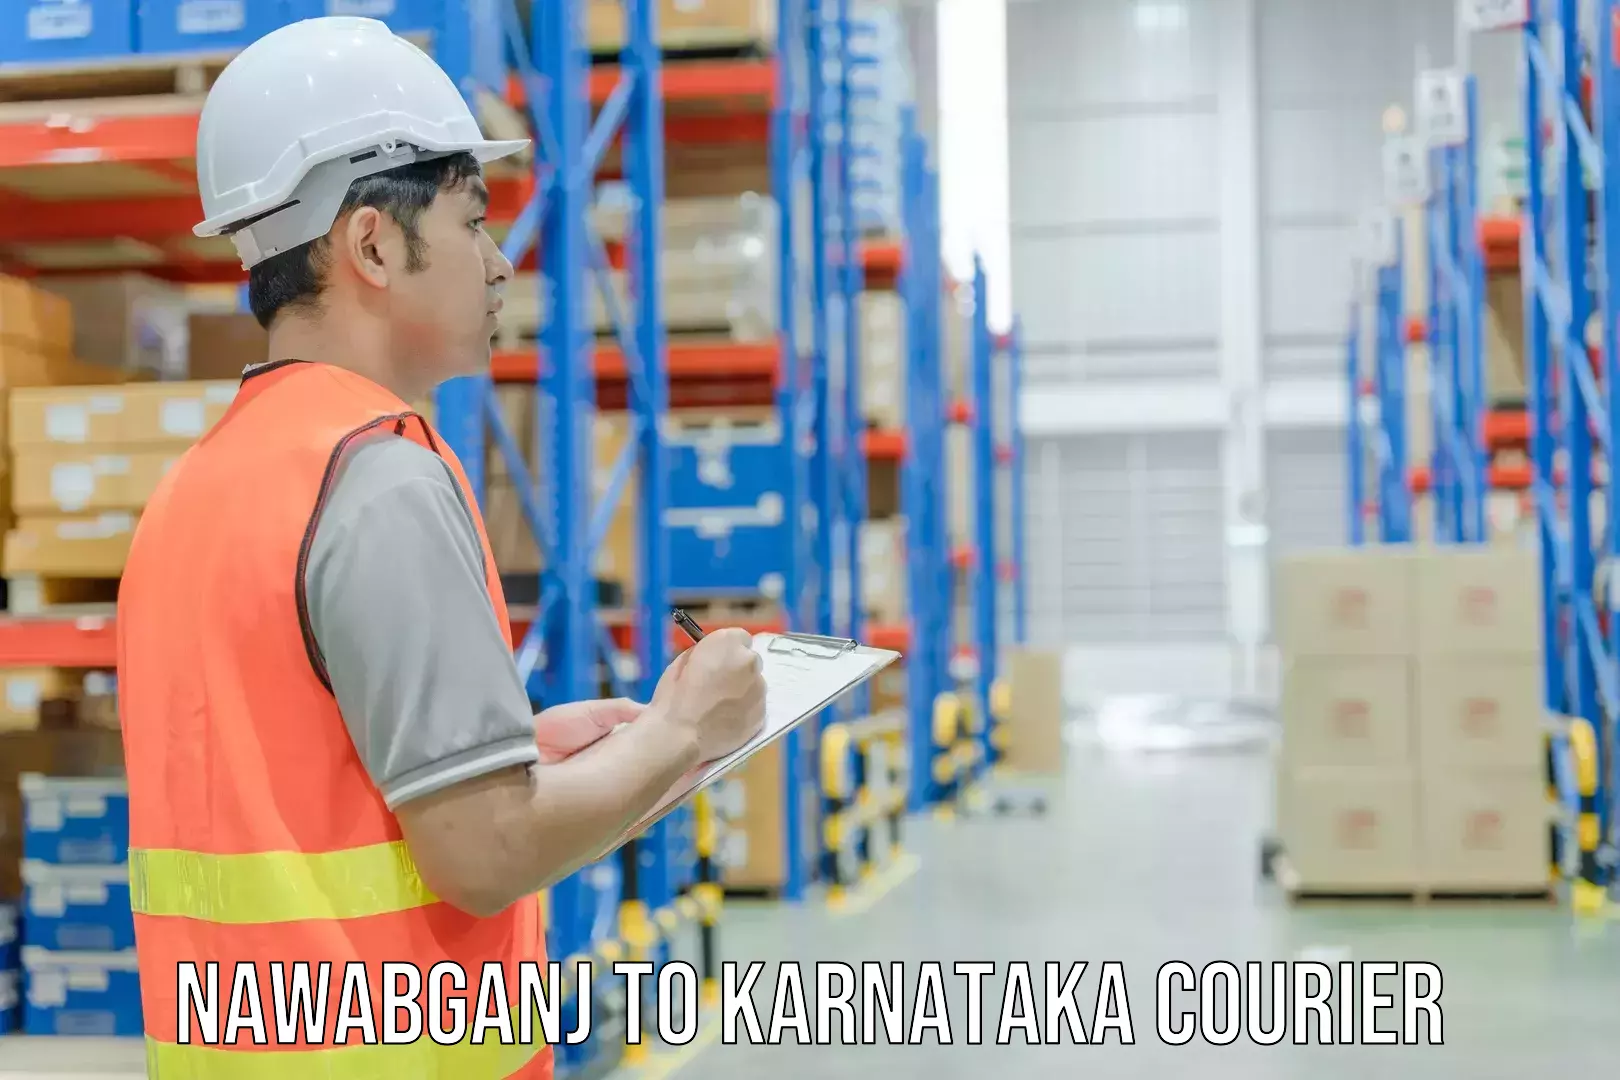 Global logistics network Nawabganj to Karnataka